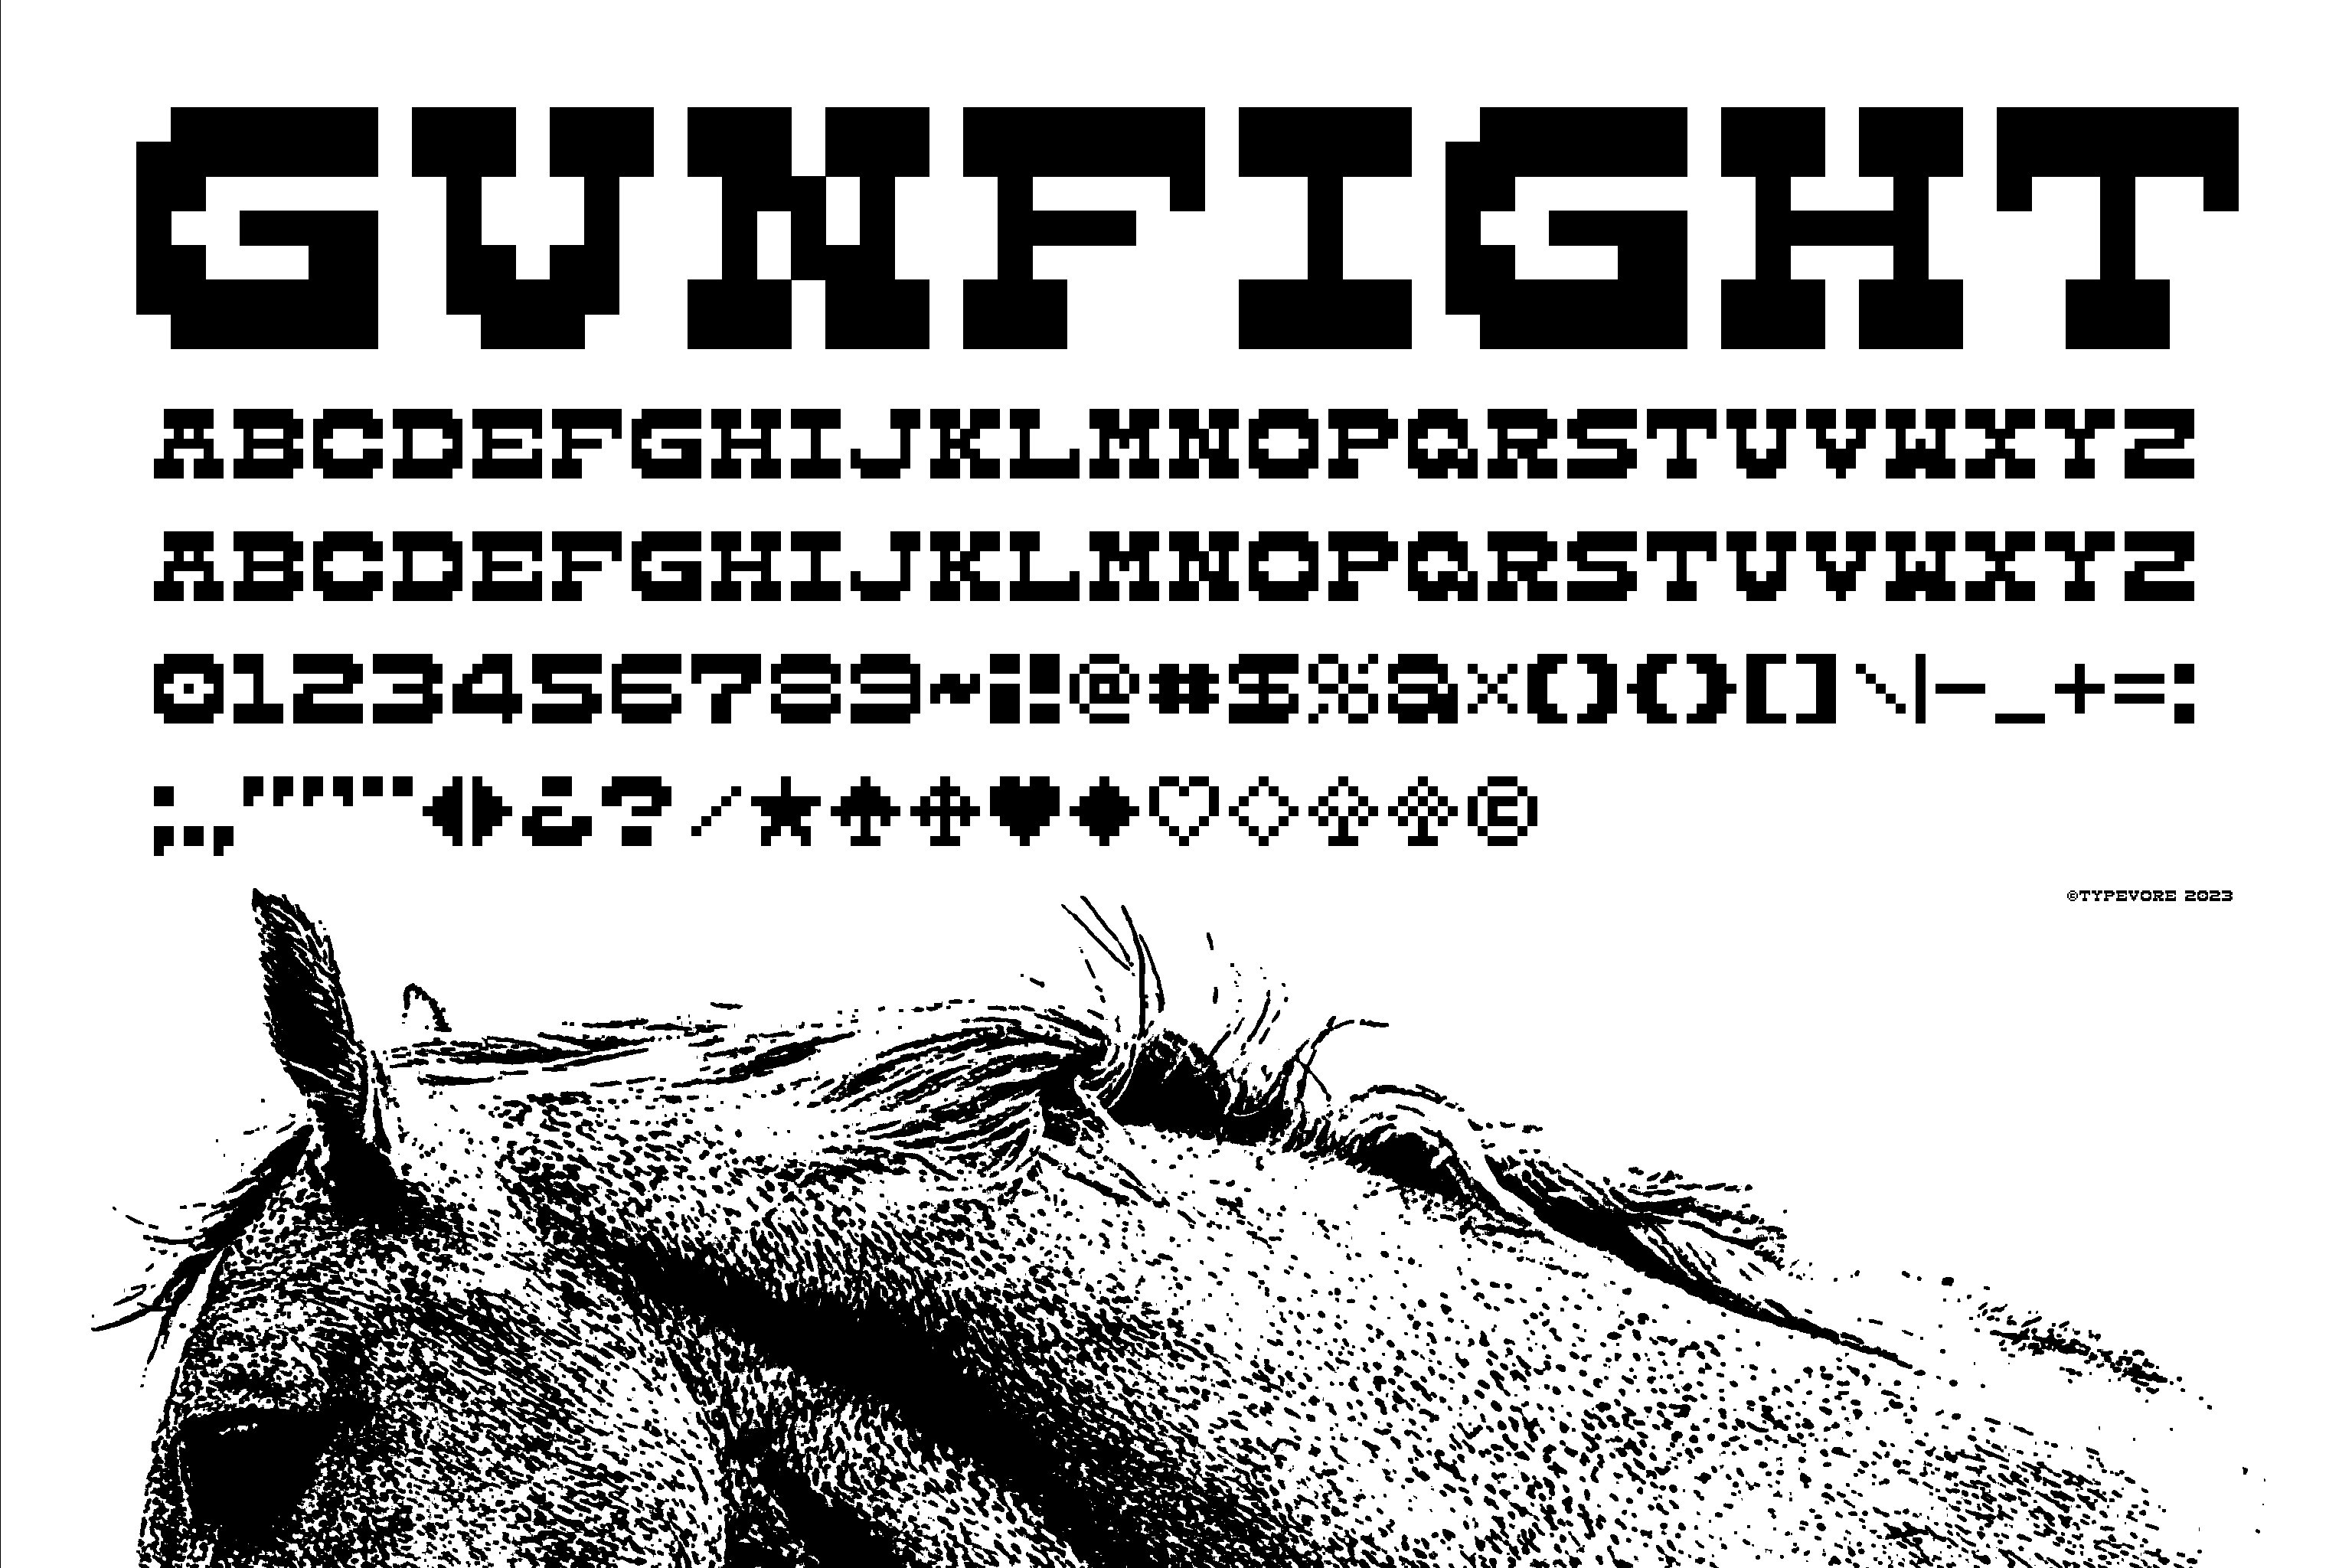 gunfight8bit font horse wbg 2 styles glyphs 352